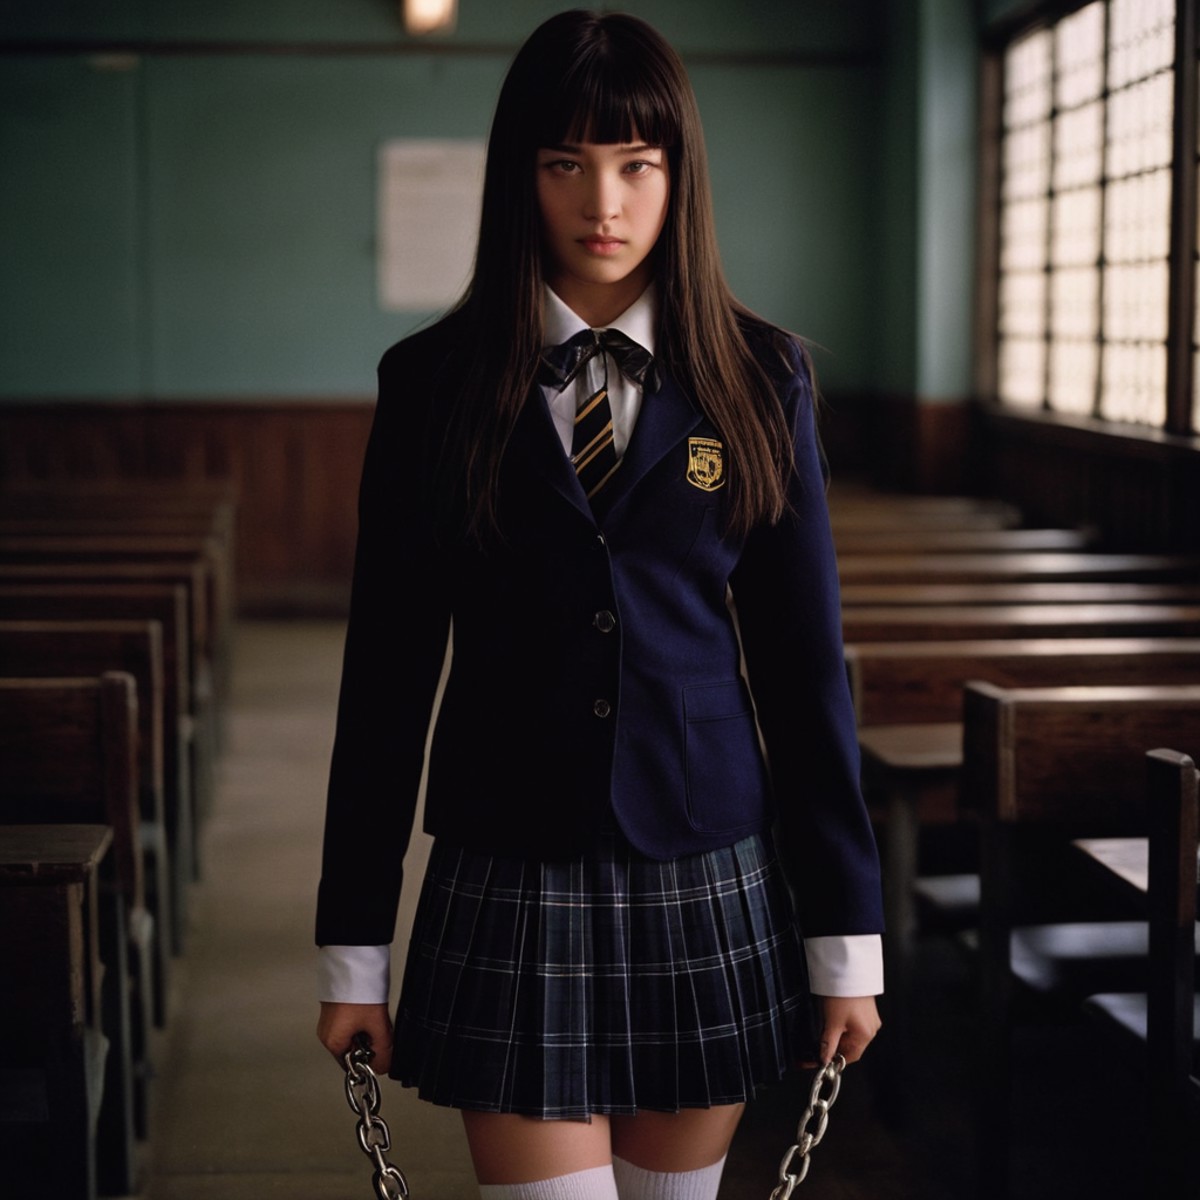 cinematic film still of  <lora:Kill Bill style:1>
Cinematic film image of Gogo Yubari a woman in a school uniform holding ...